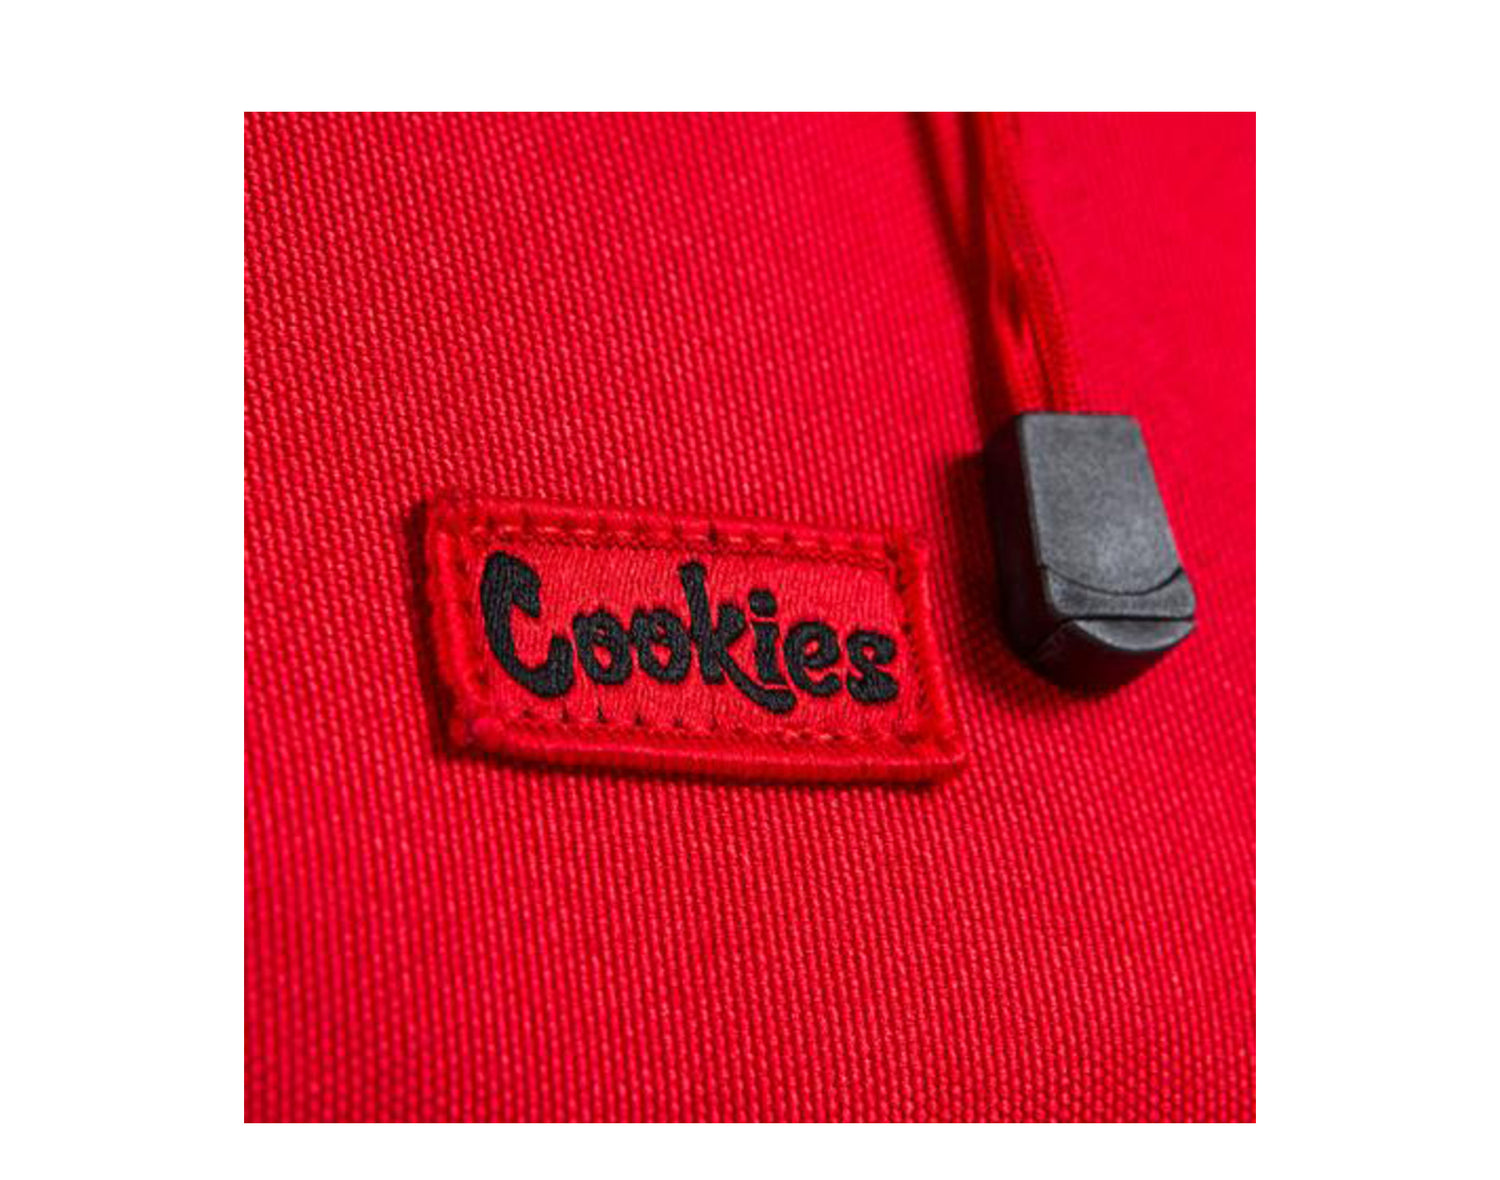 Cookies Explorer Smell Proof Duffel Bag